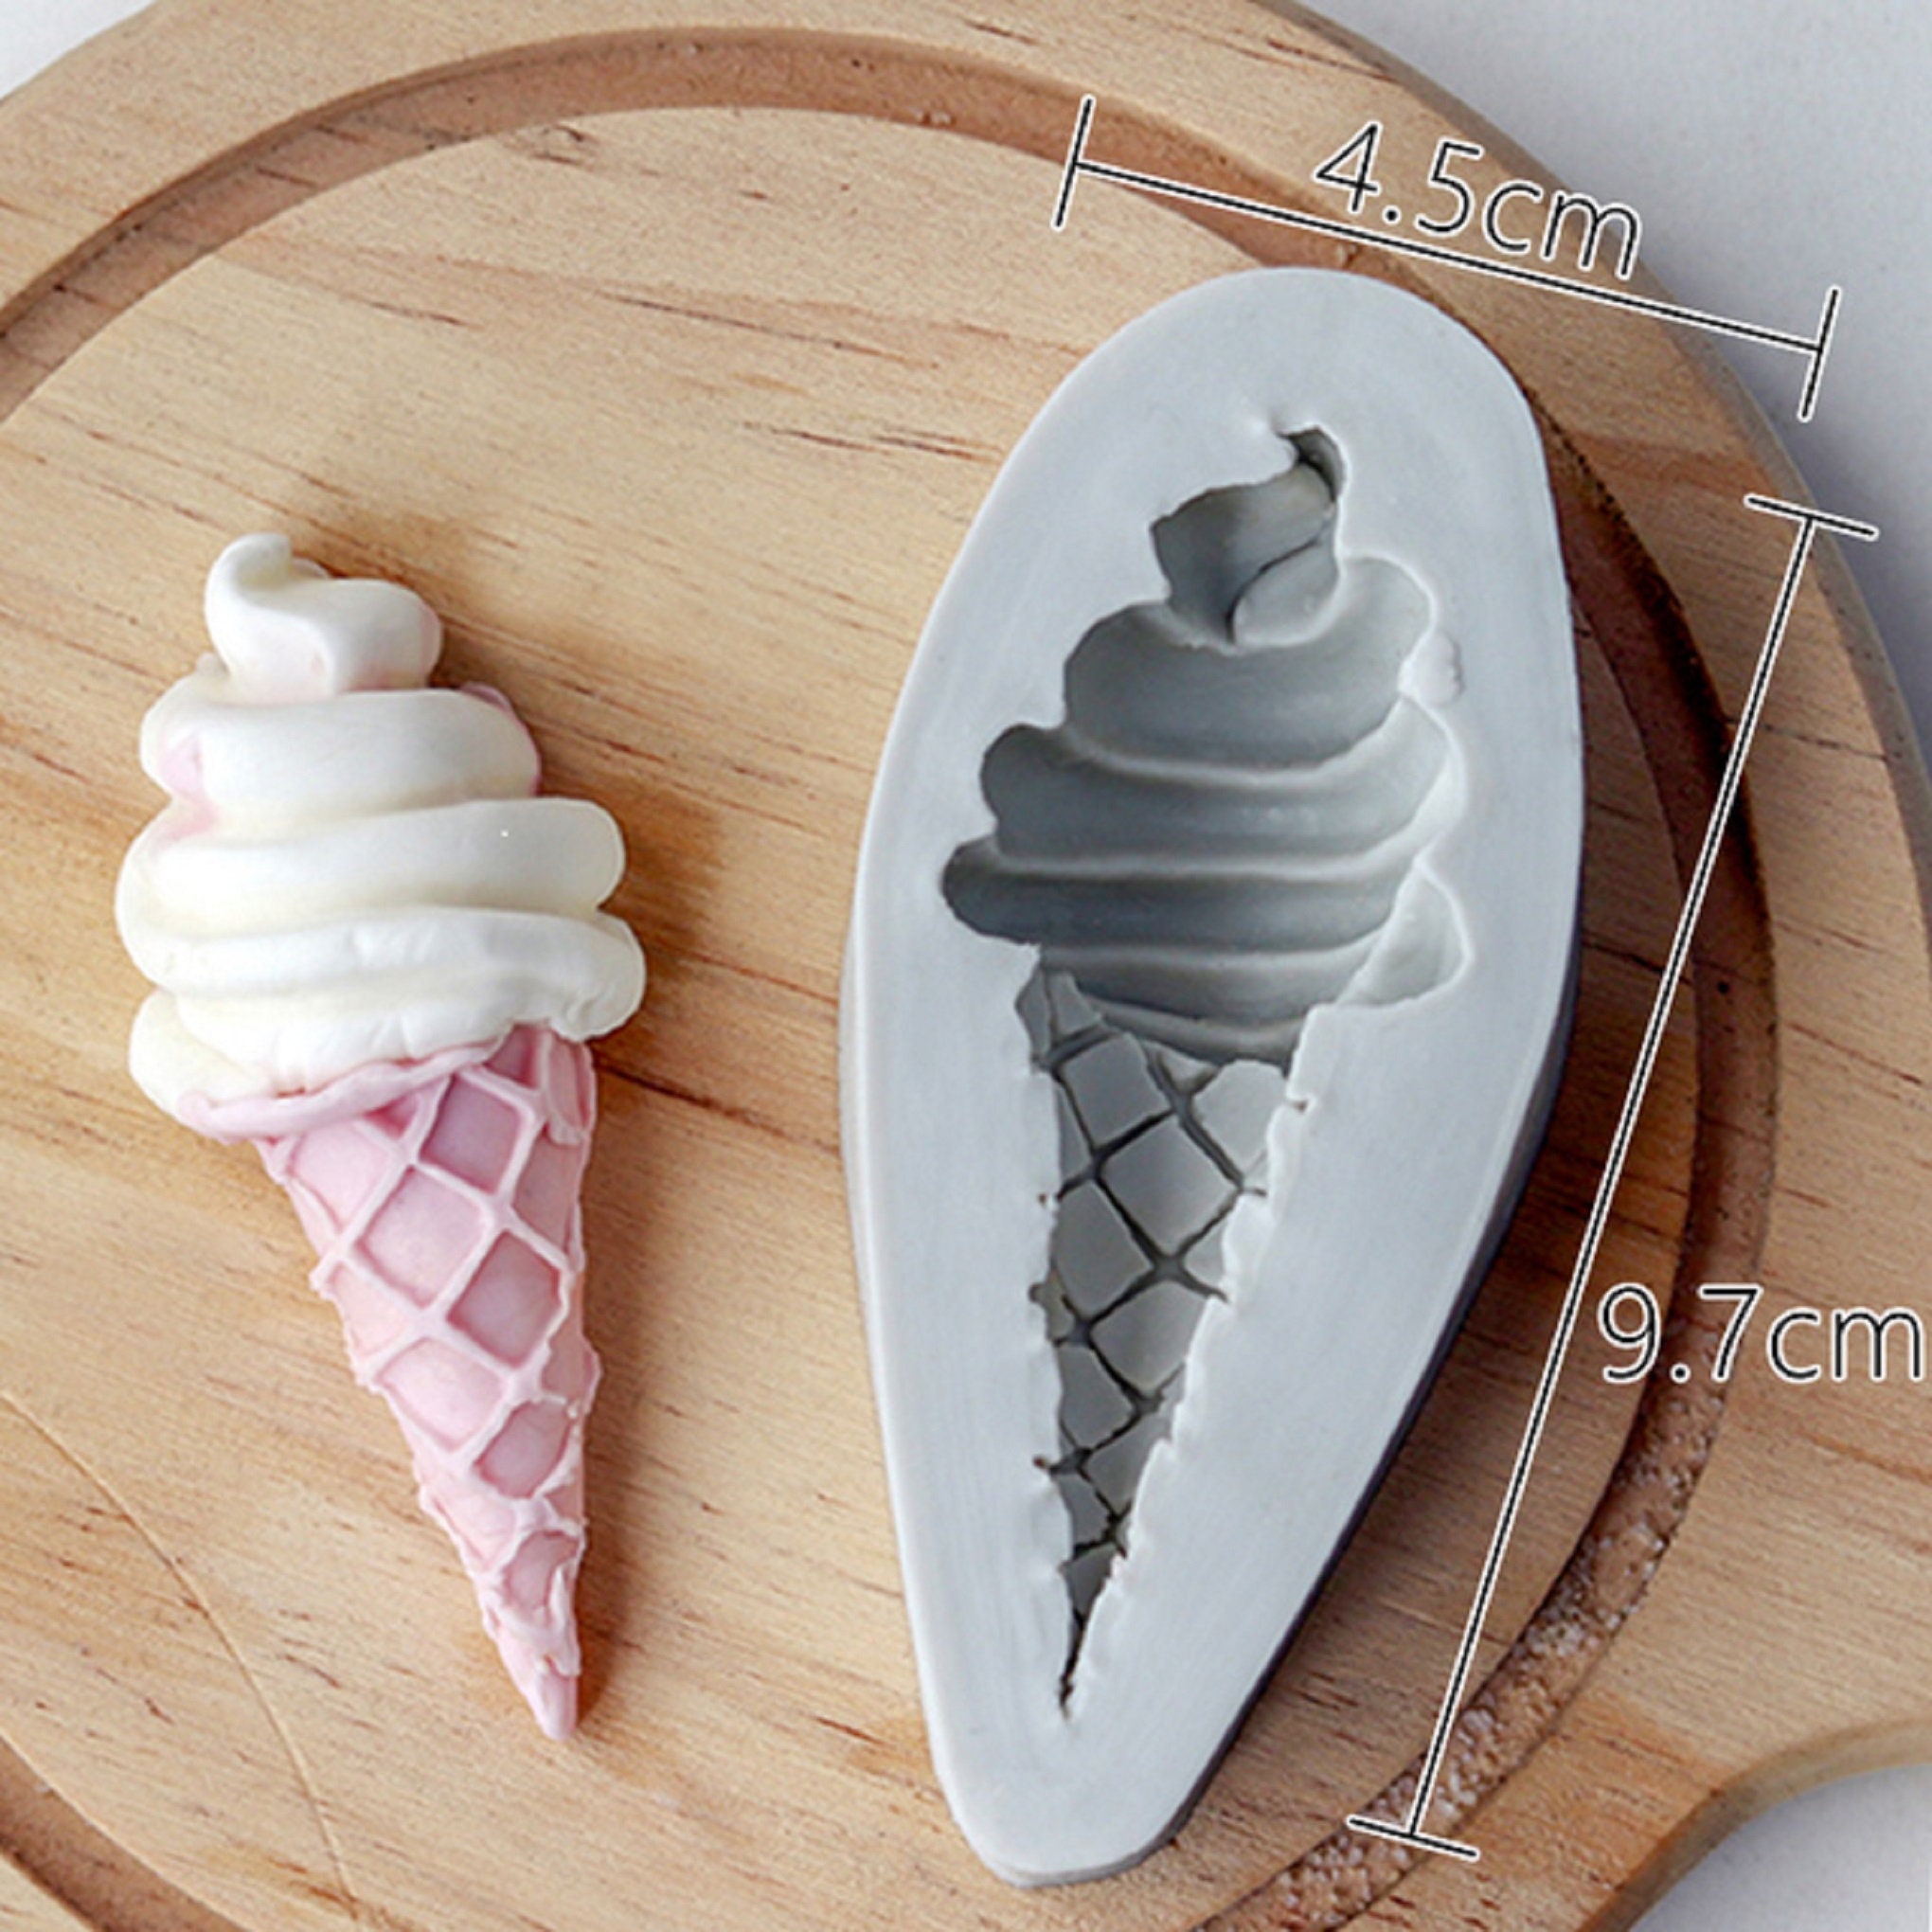 1:6 Scale Miniature Mold // Flexible Silicone Ice Cream Scoop Mold